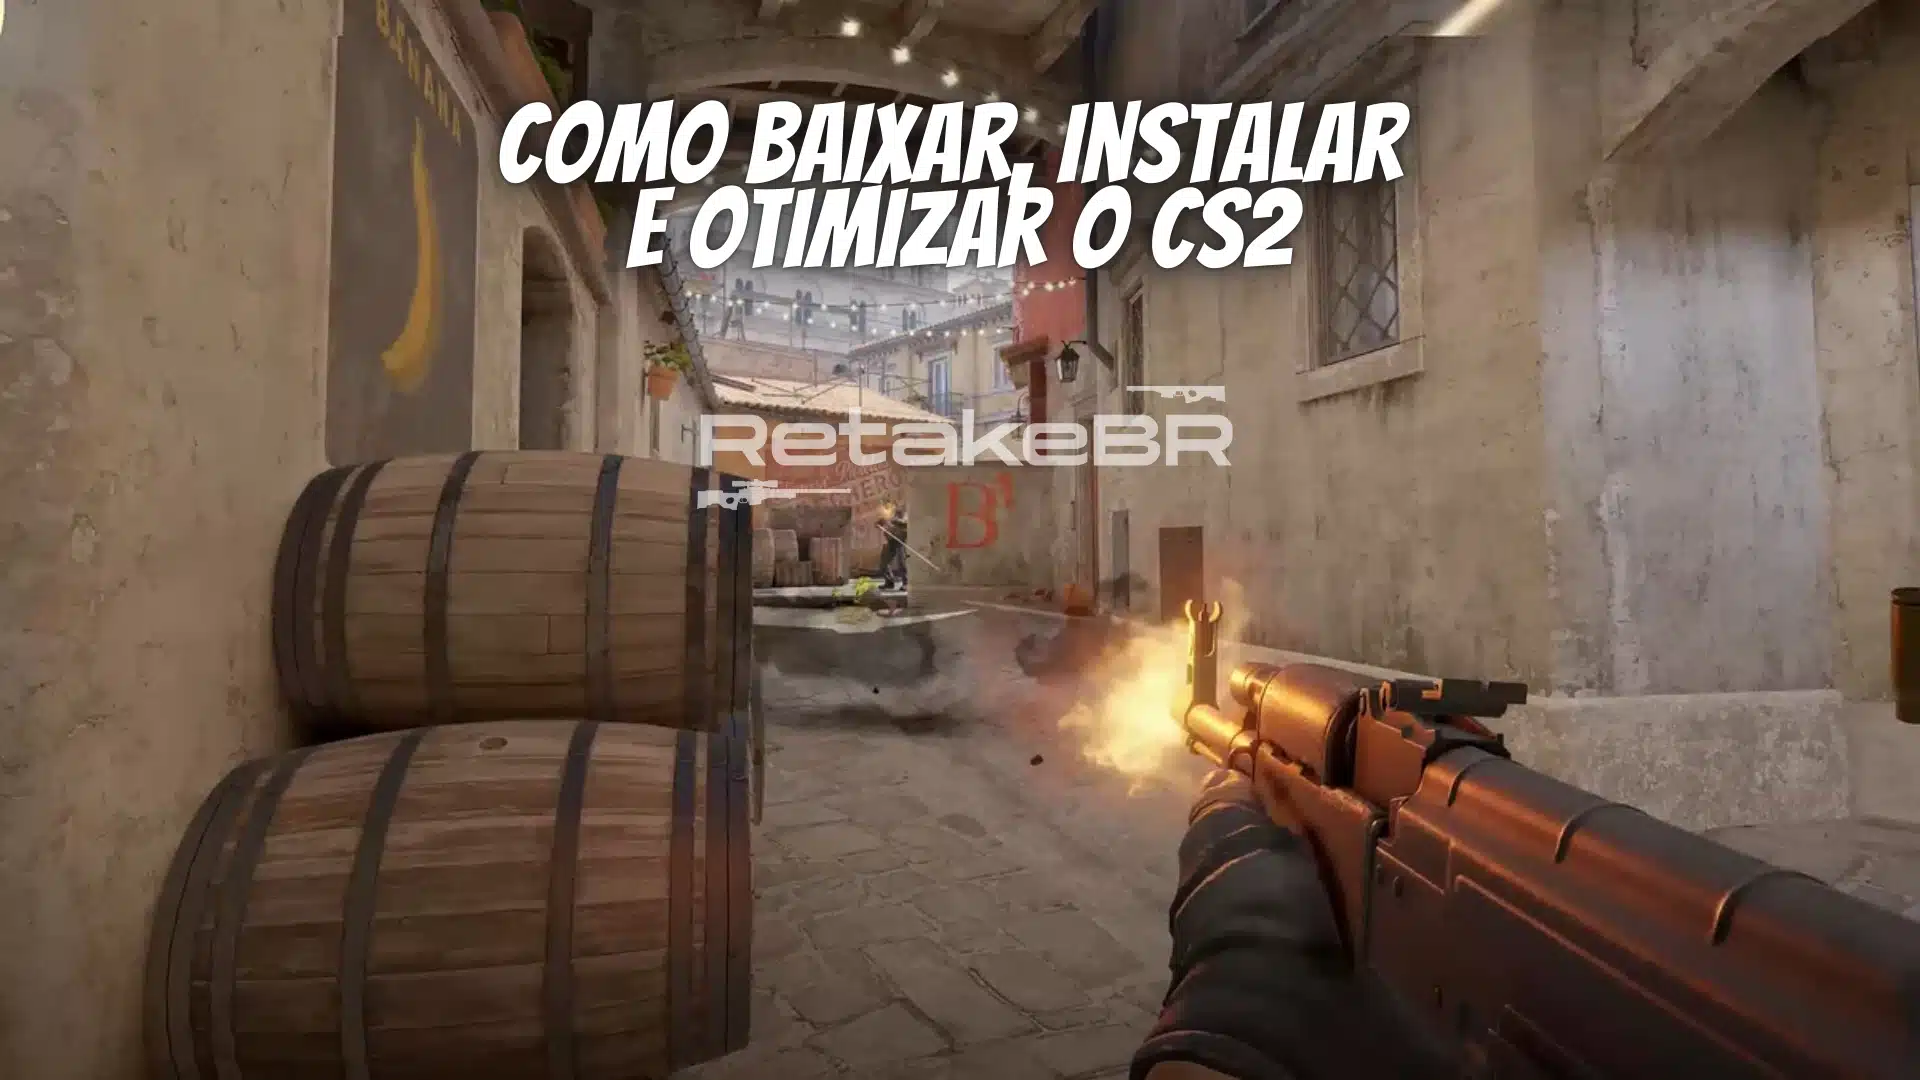 Counter-Strike 2 será pago ou grátis?